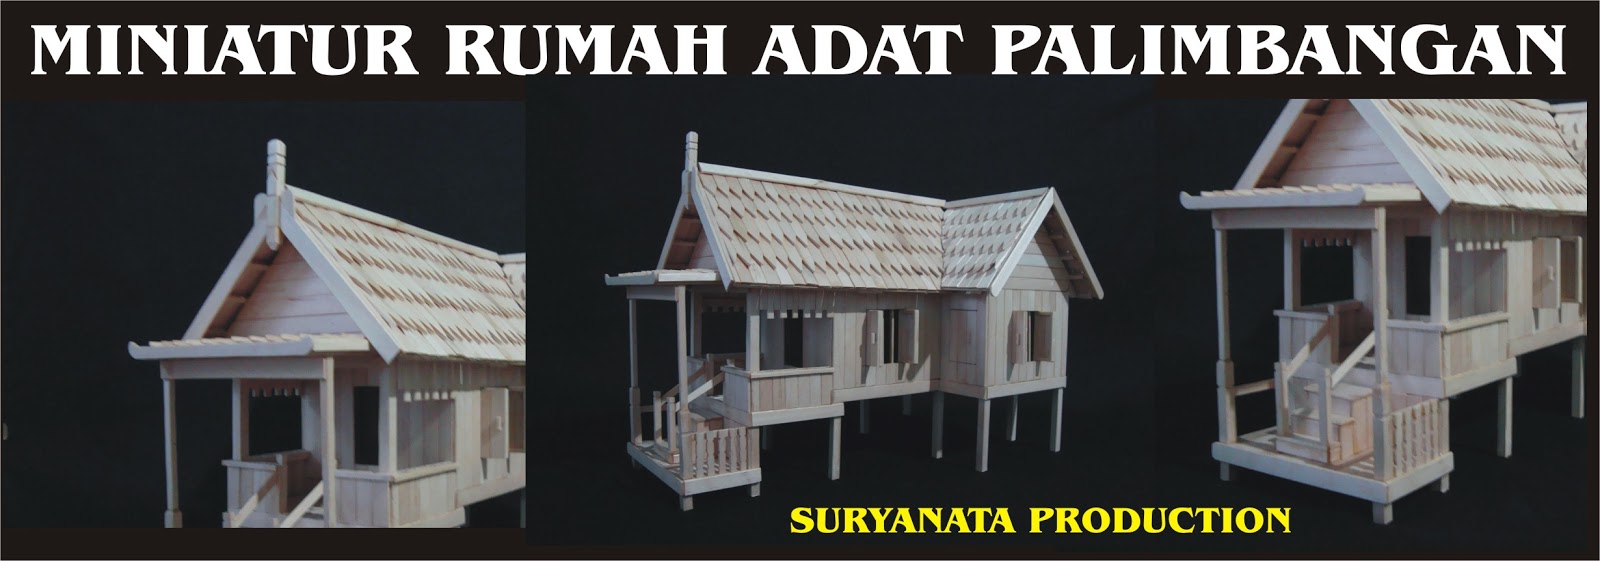 Suryanata com Miniatur Rumah Banjar